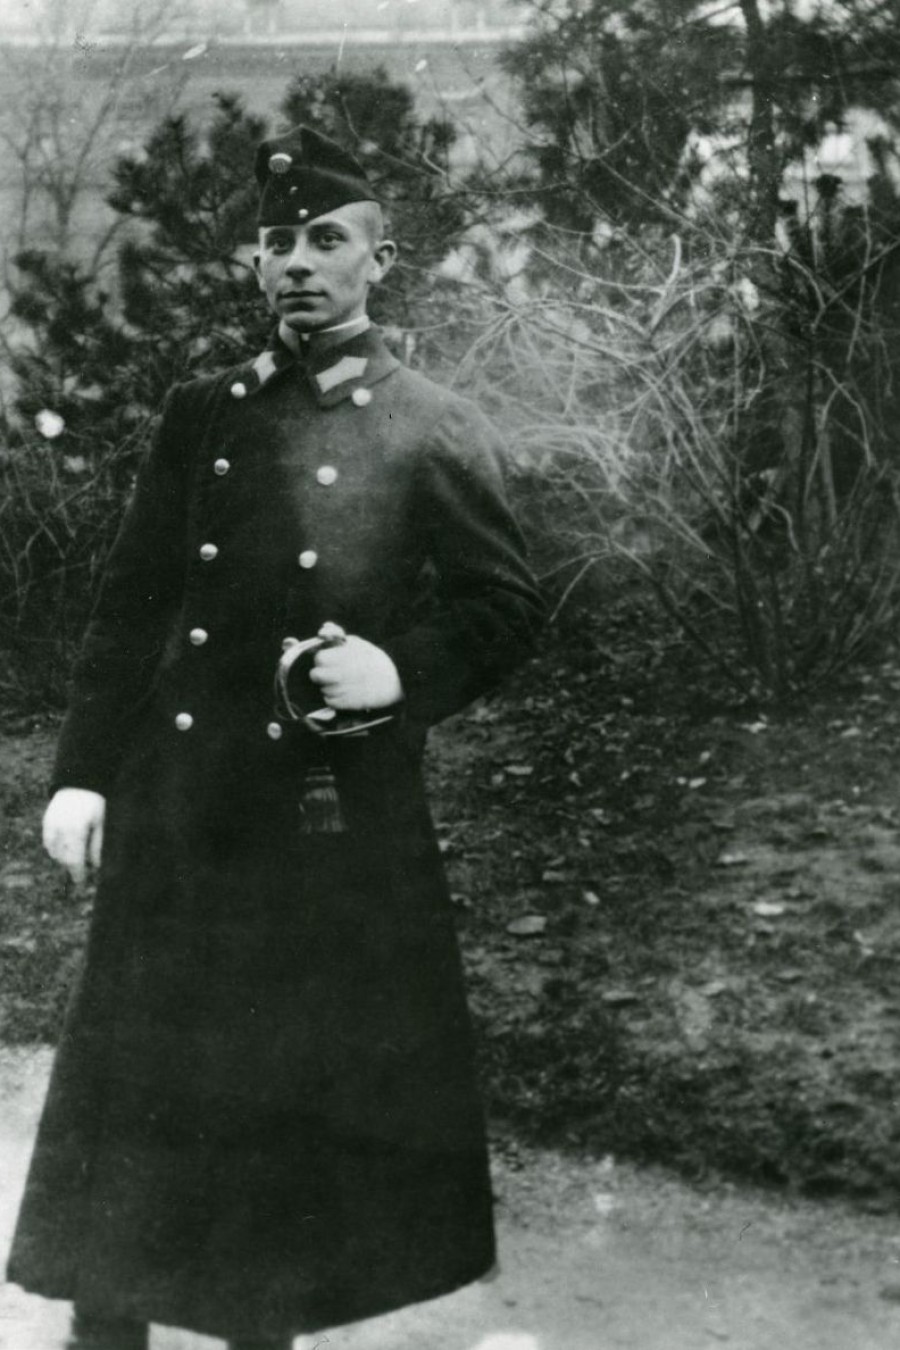 Young Stroheim in uniform, ca. 1900